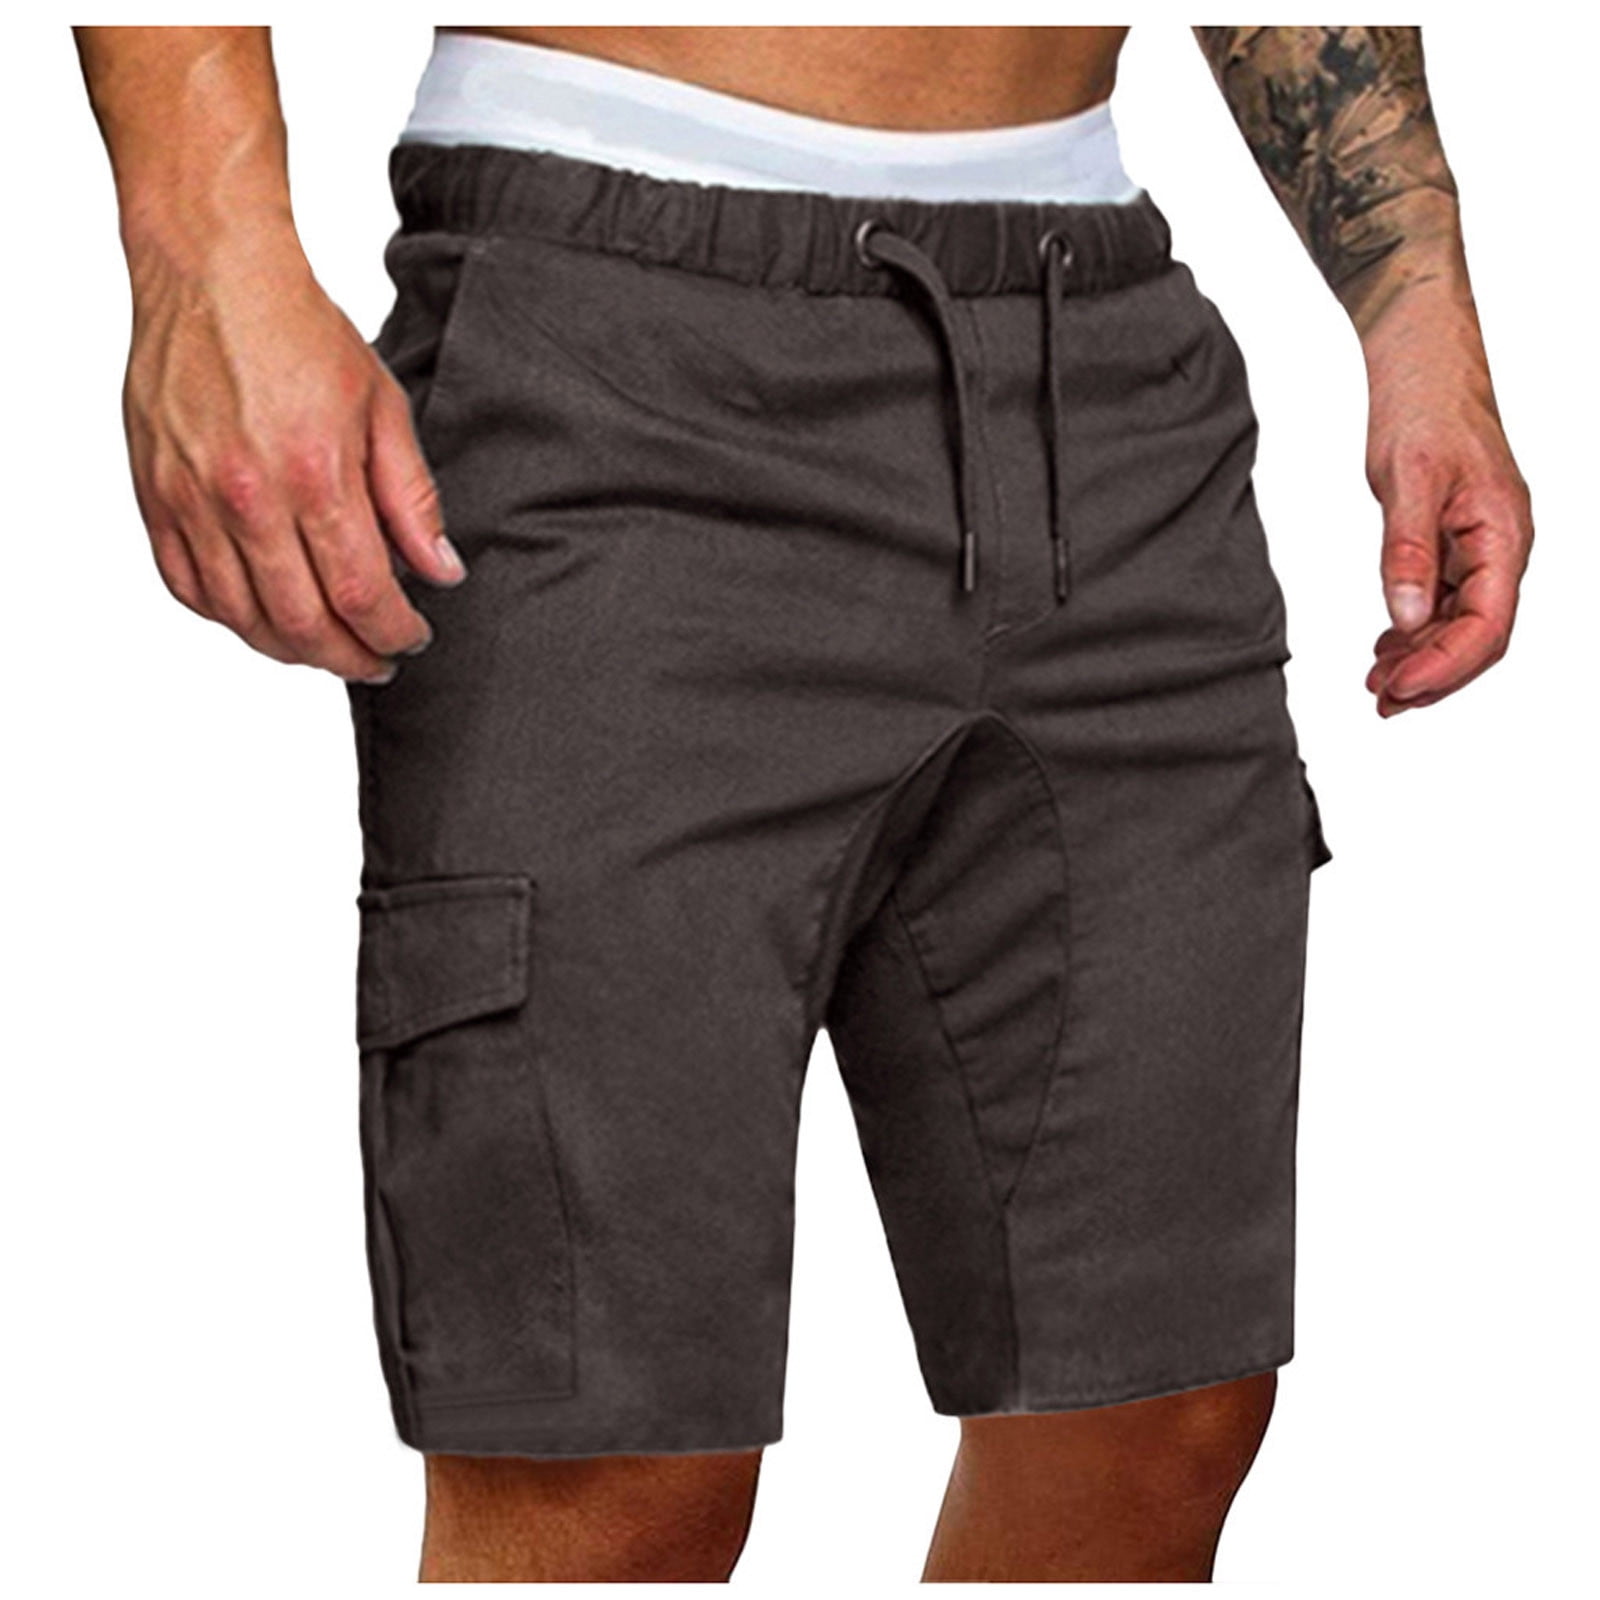 Black and Friday Deals Zkozptok Cargo Shorts for Men Short Shorts Multi ...